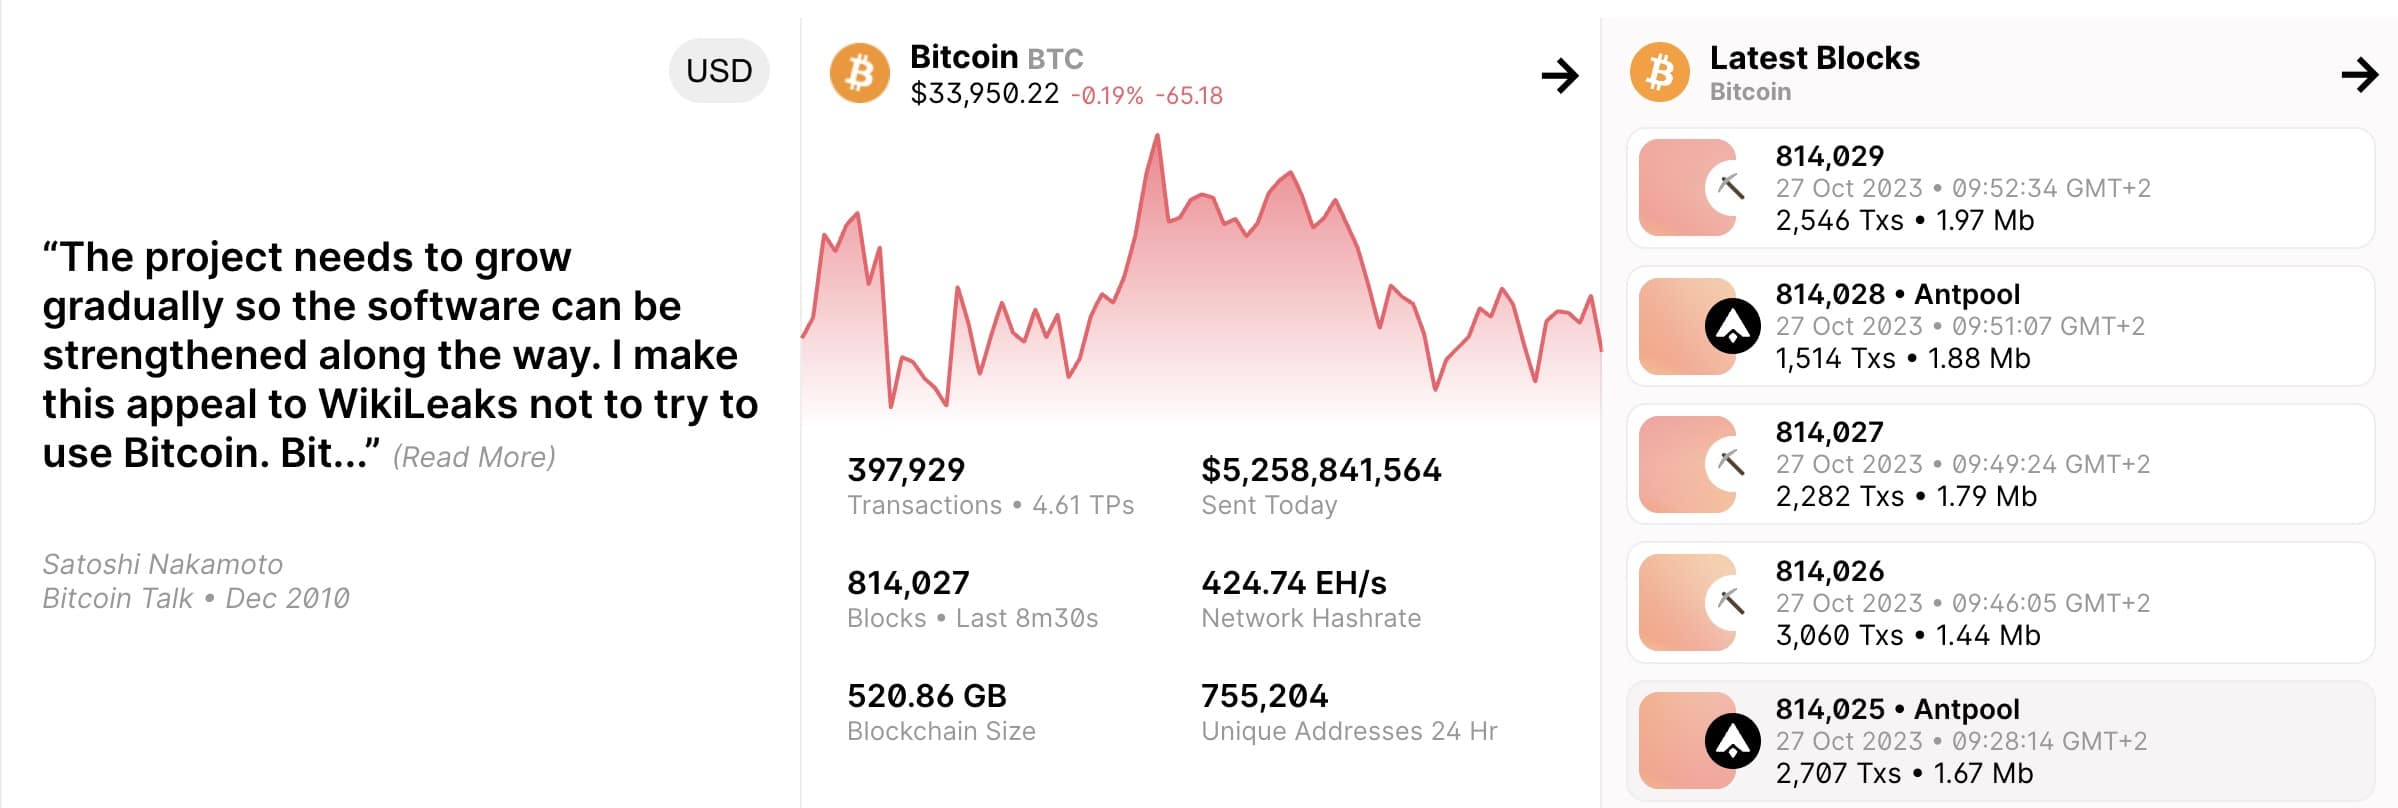 Bitcoin's stats on a block explorer, featuring block height